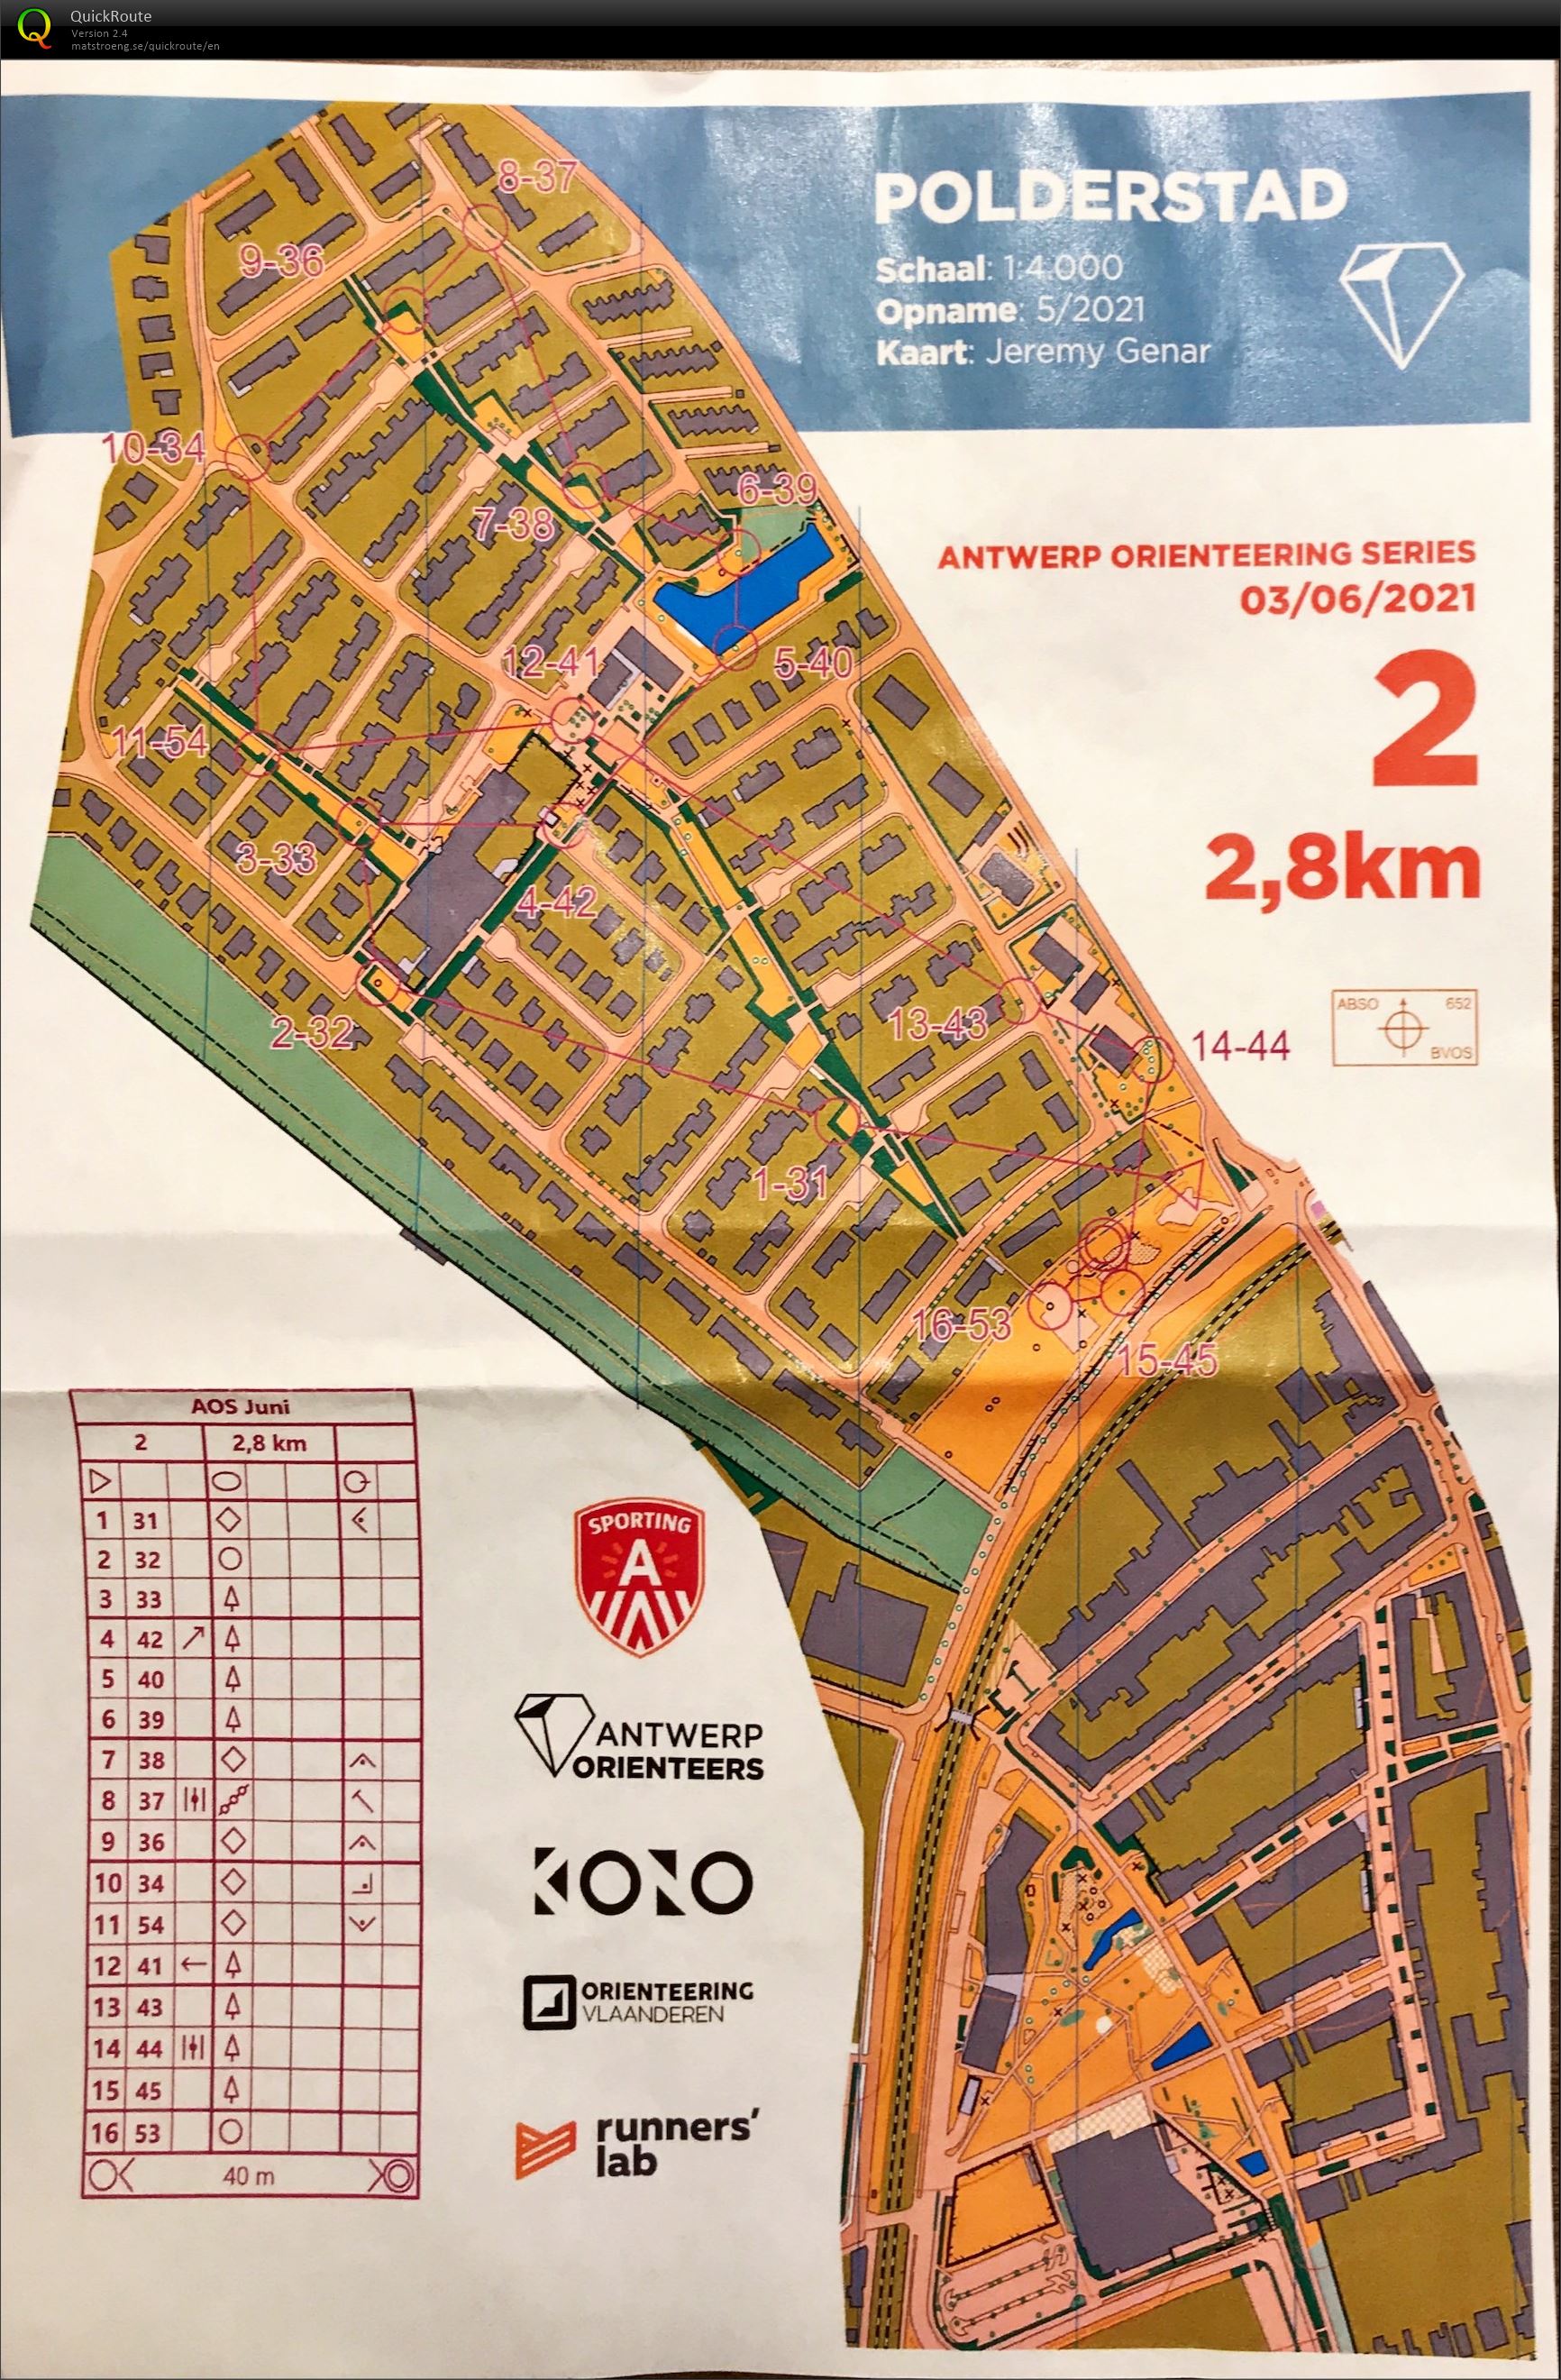 Antwerp Orienteering Series - Polderstad - 2.8K (03-06-2021)